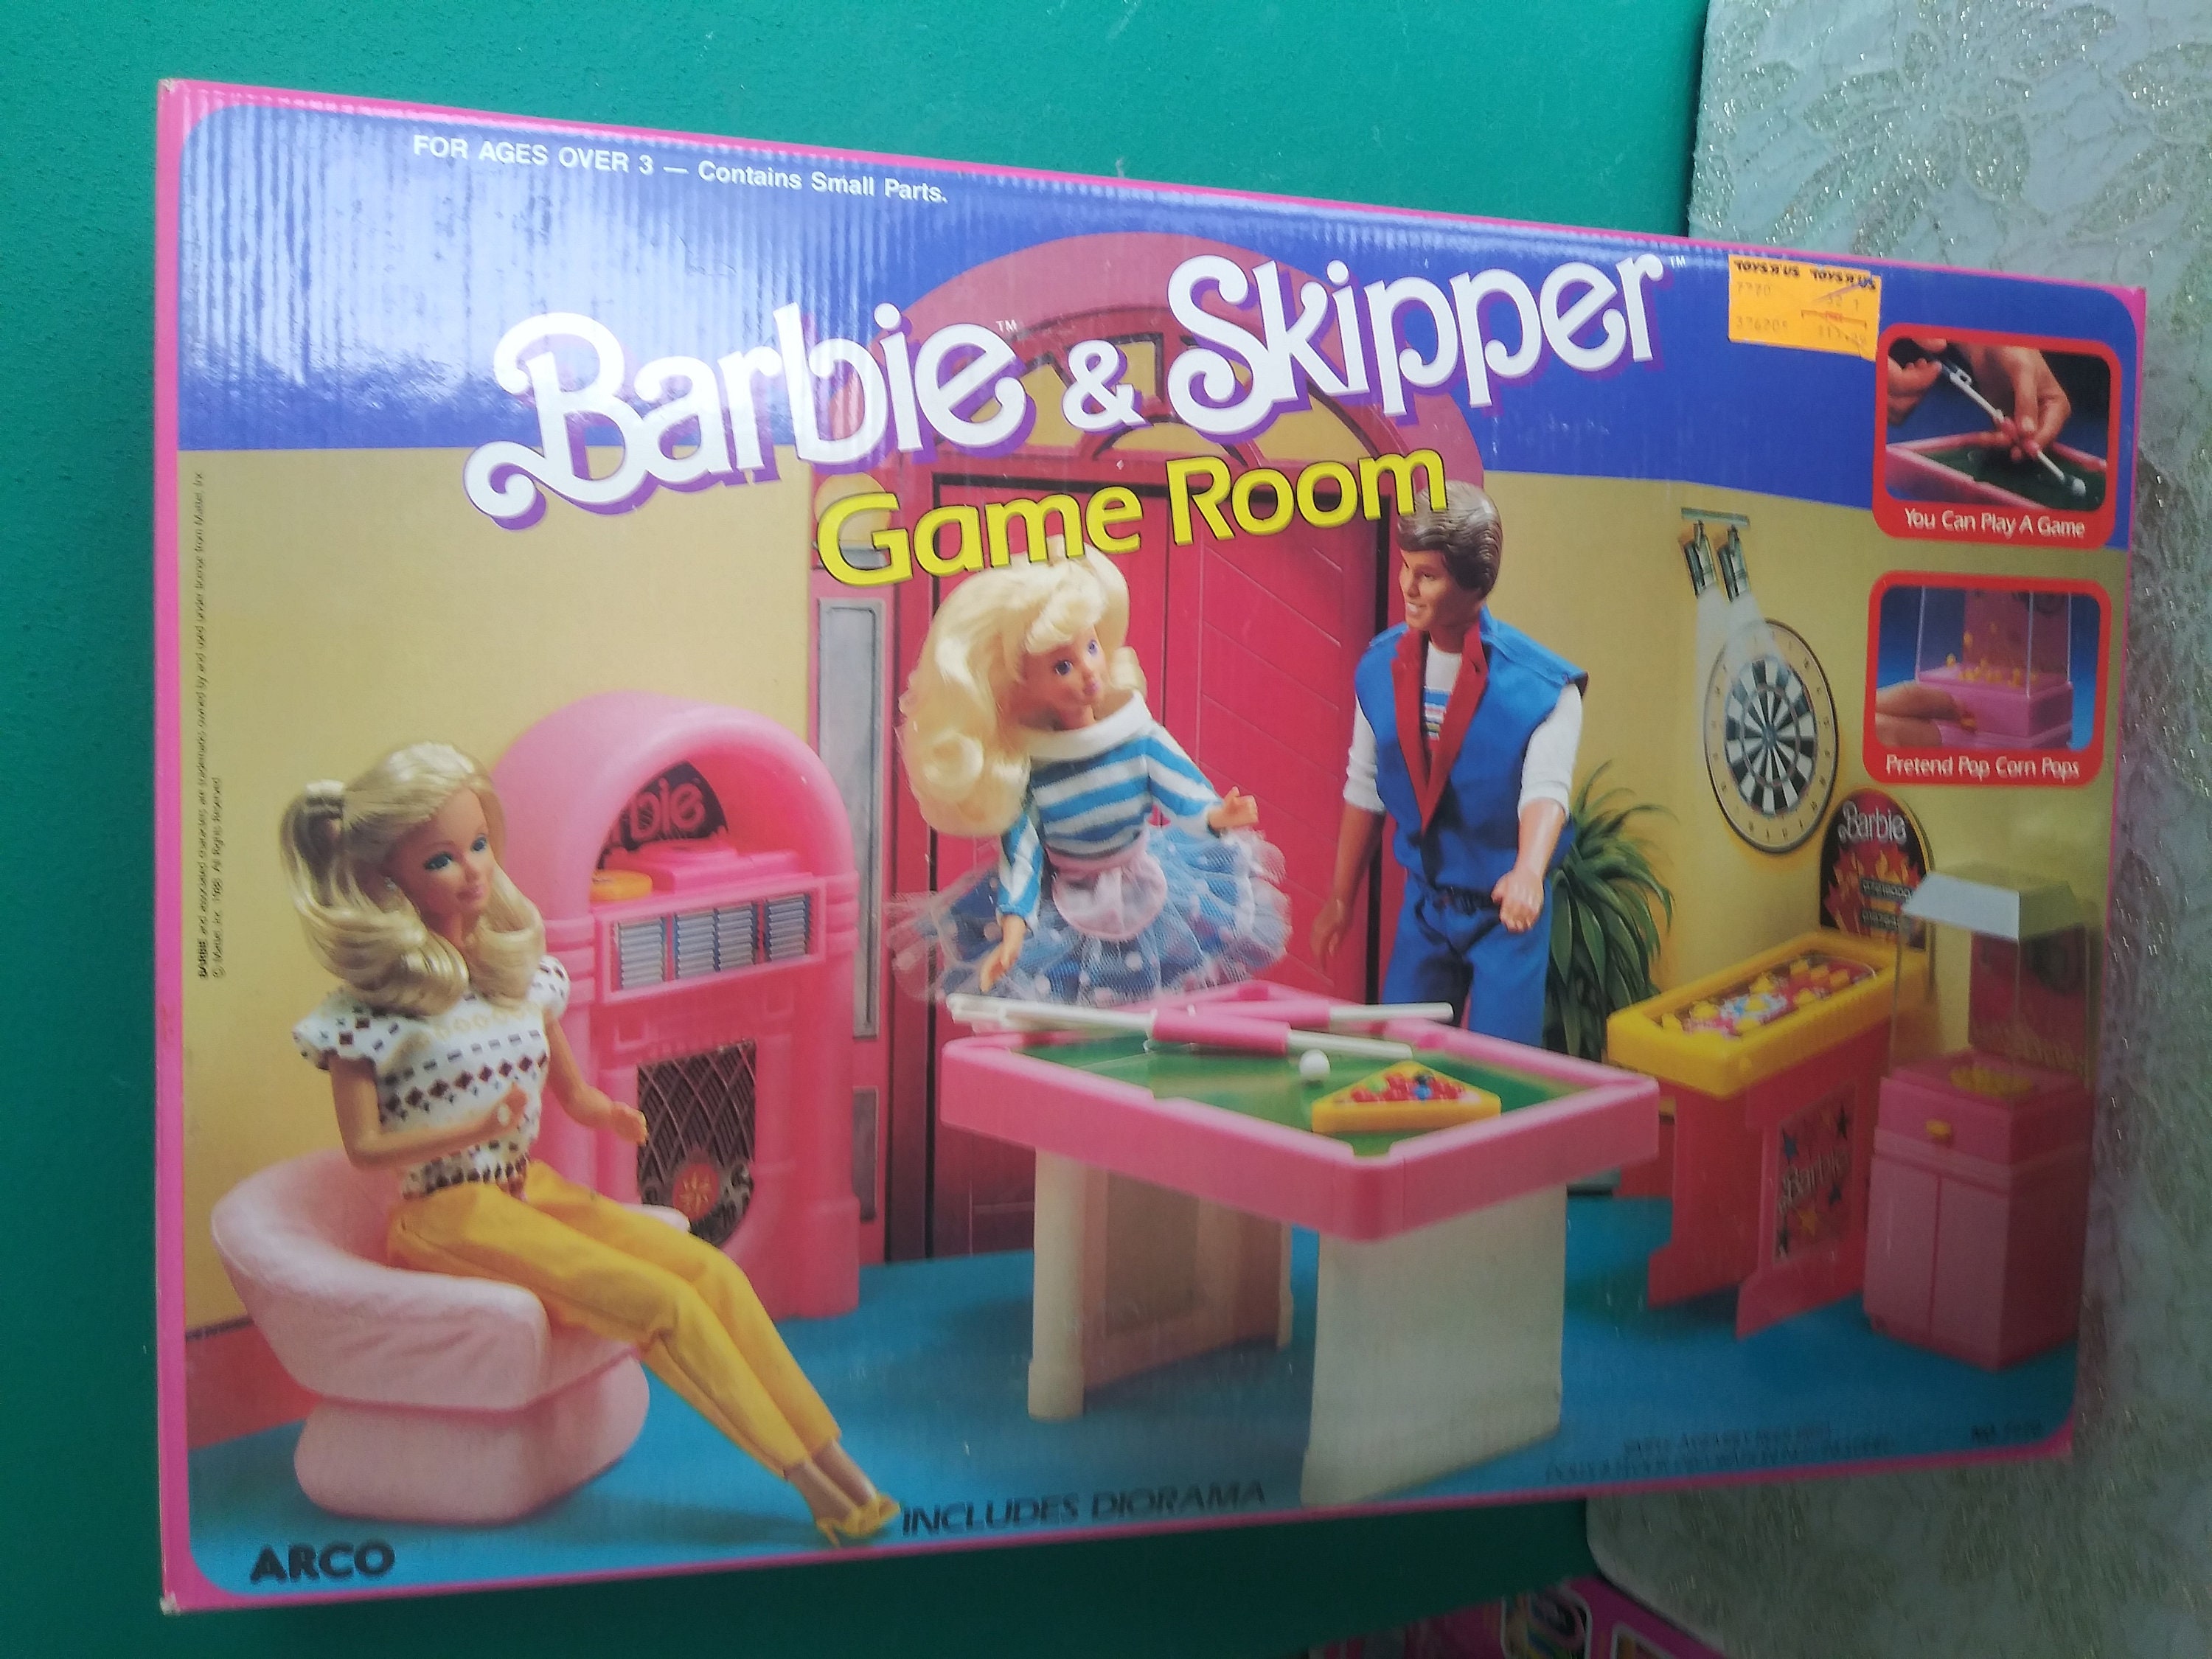 Barbie's Game Room